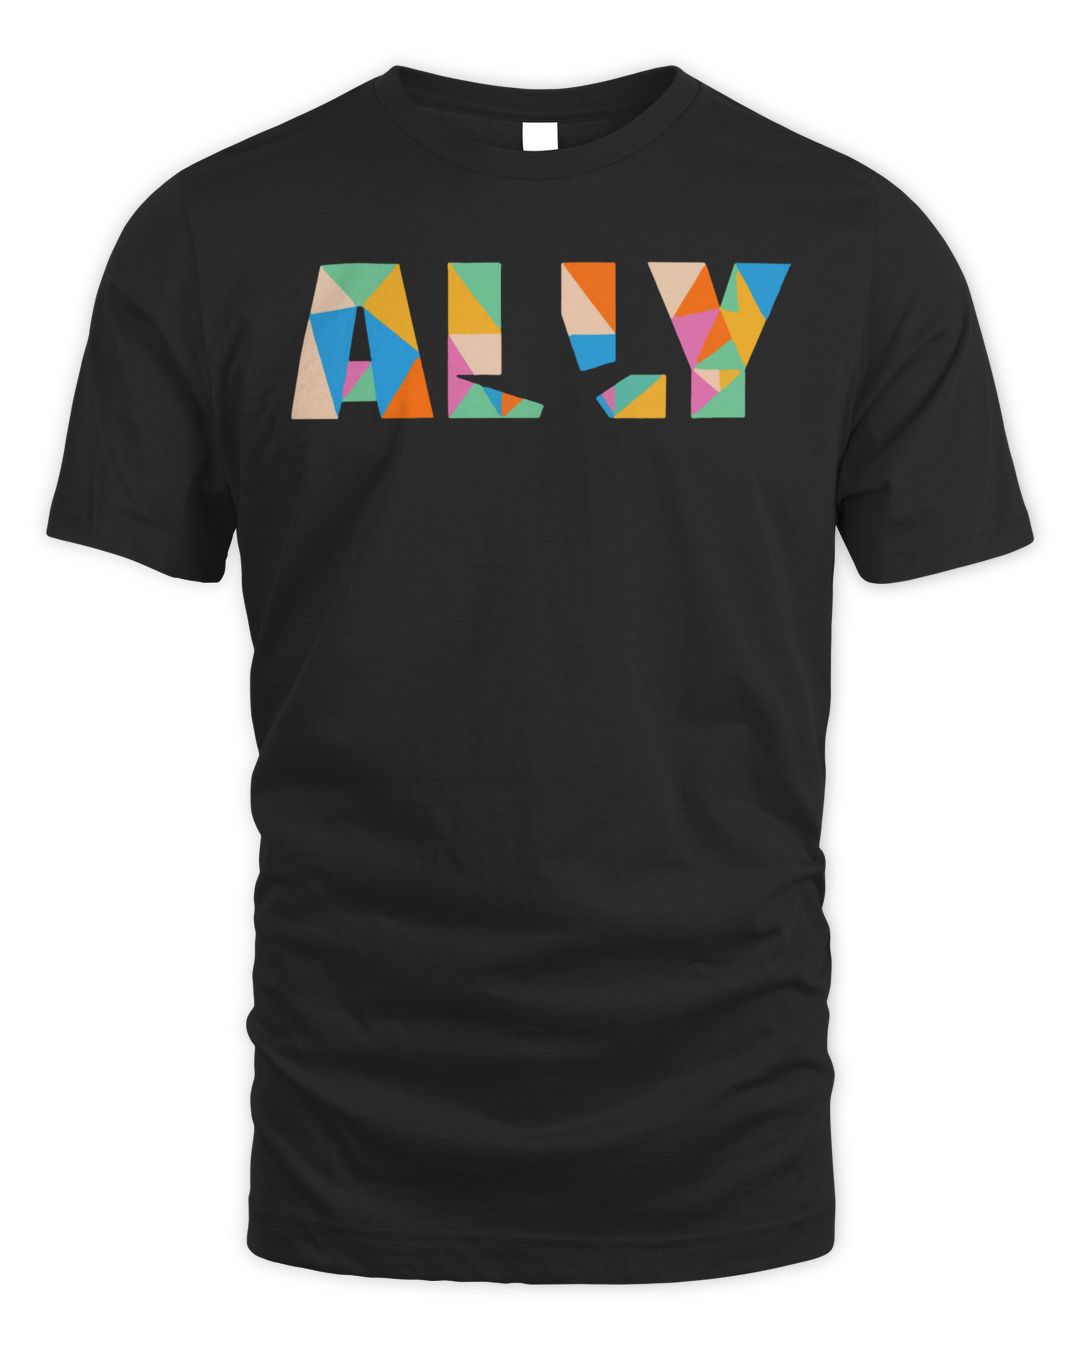 The Trevor Project Merch Ally Shirt